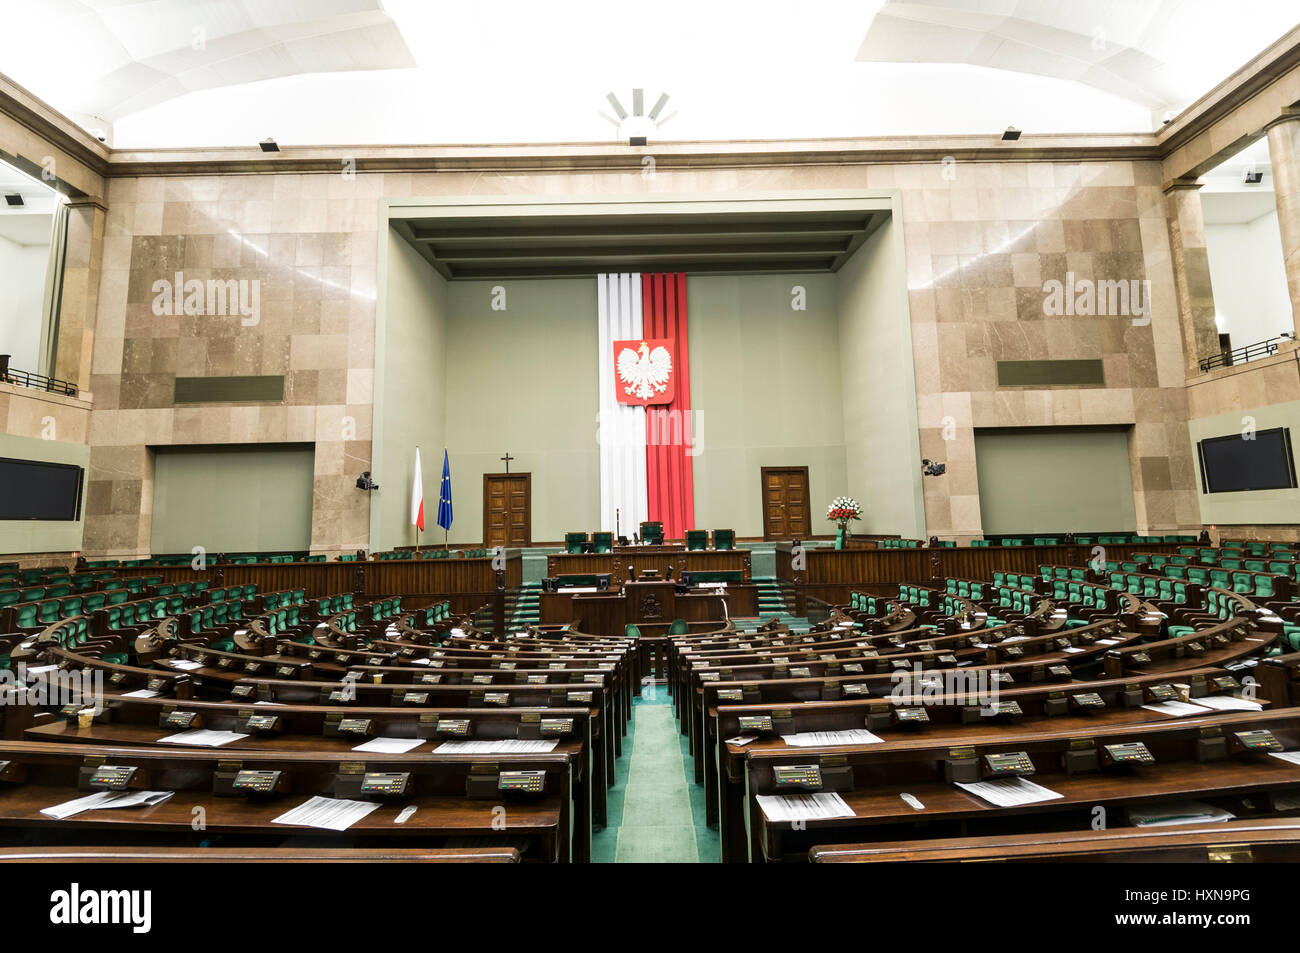 The Polish Sejim Debate Hall of the Polish Parliament in Warsaw, Poland. Stock Photo